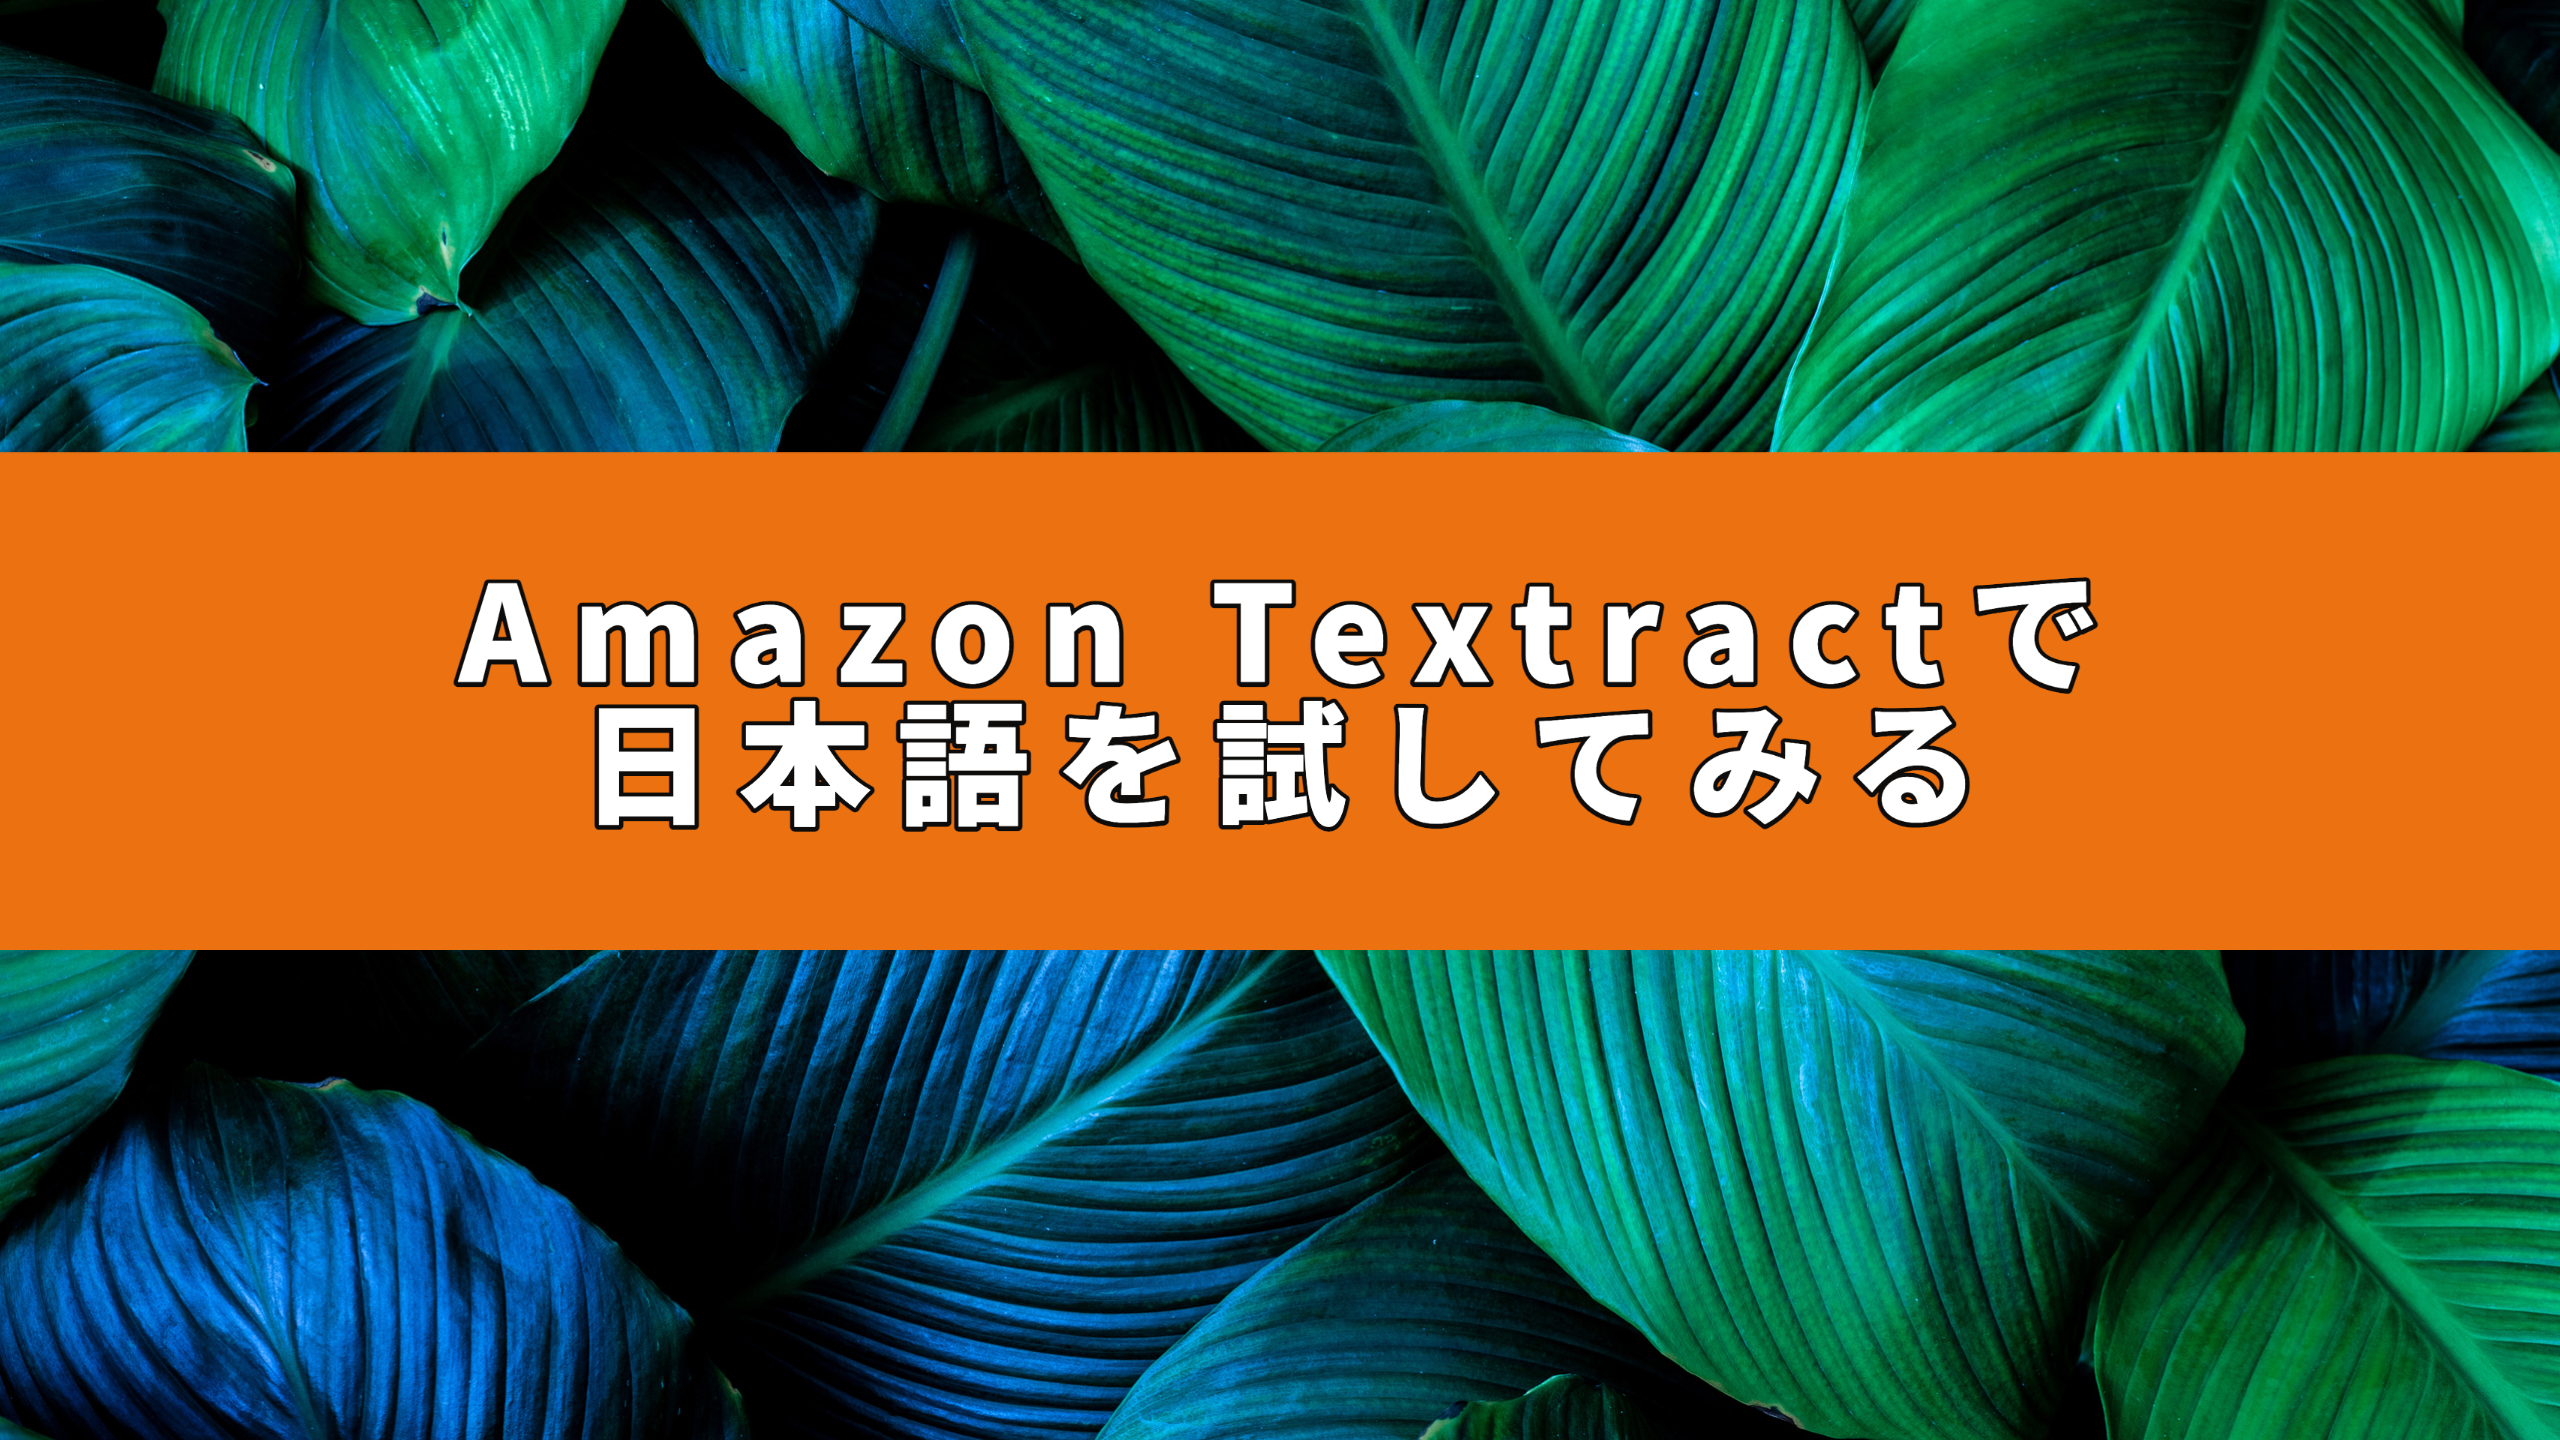 Amazon Textractで日本語を試してみる